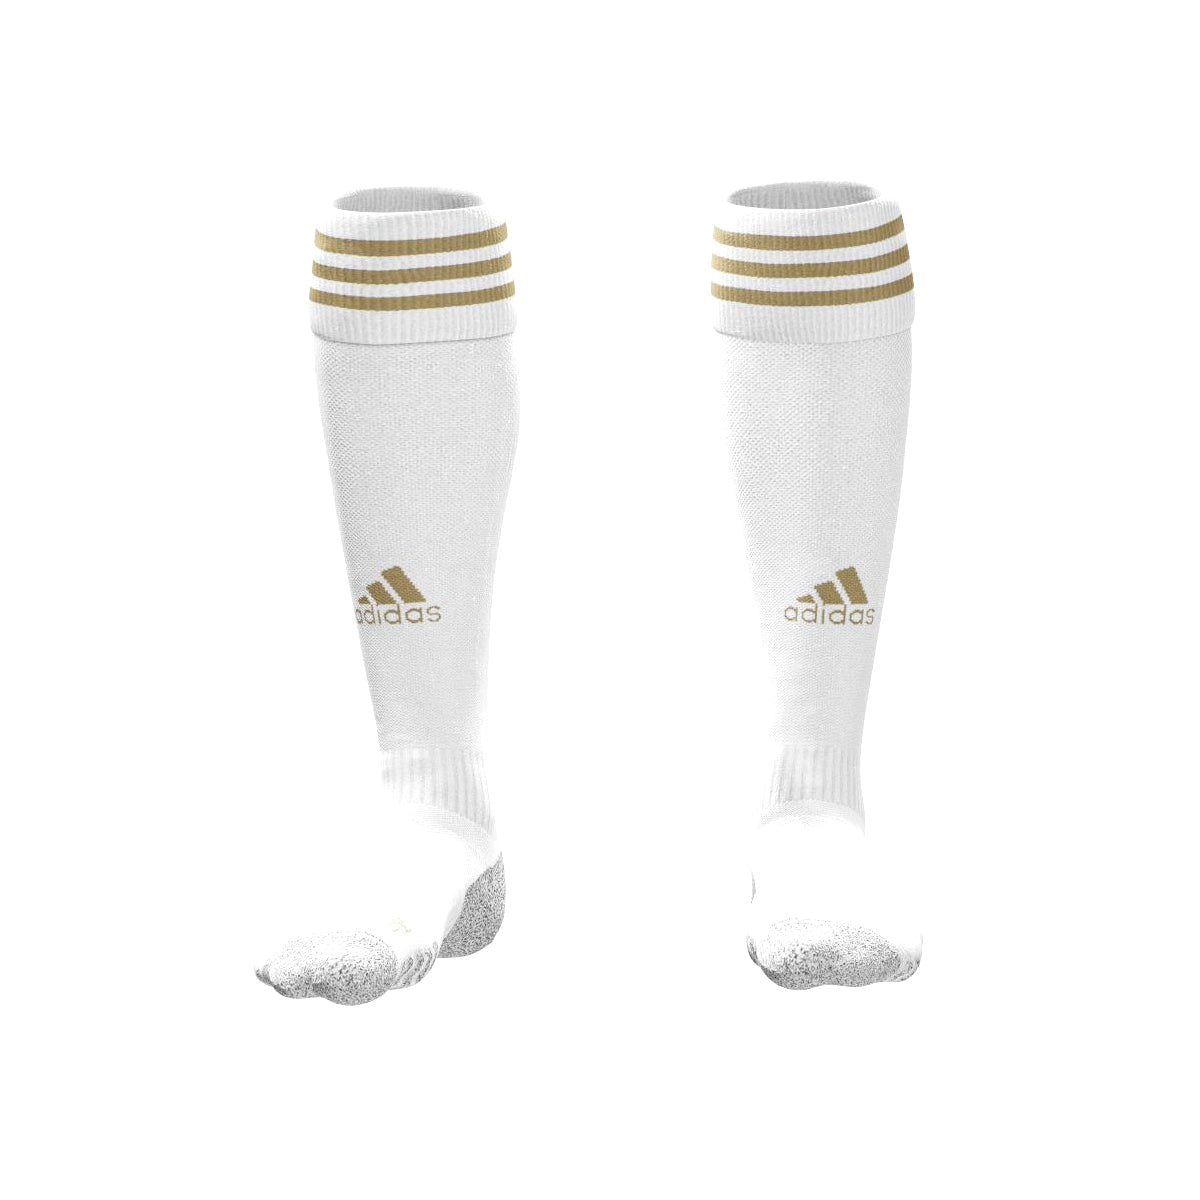 Pearl City Soccer Club Socks | Black and White Soccer Socks Adidas Size 1 (3-4.5 shoes) White 